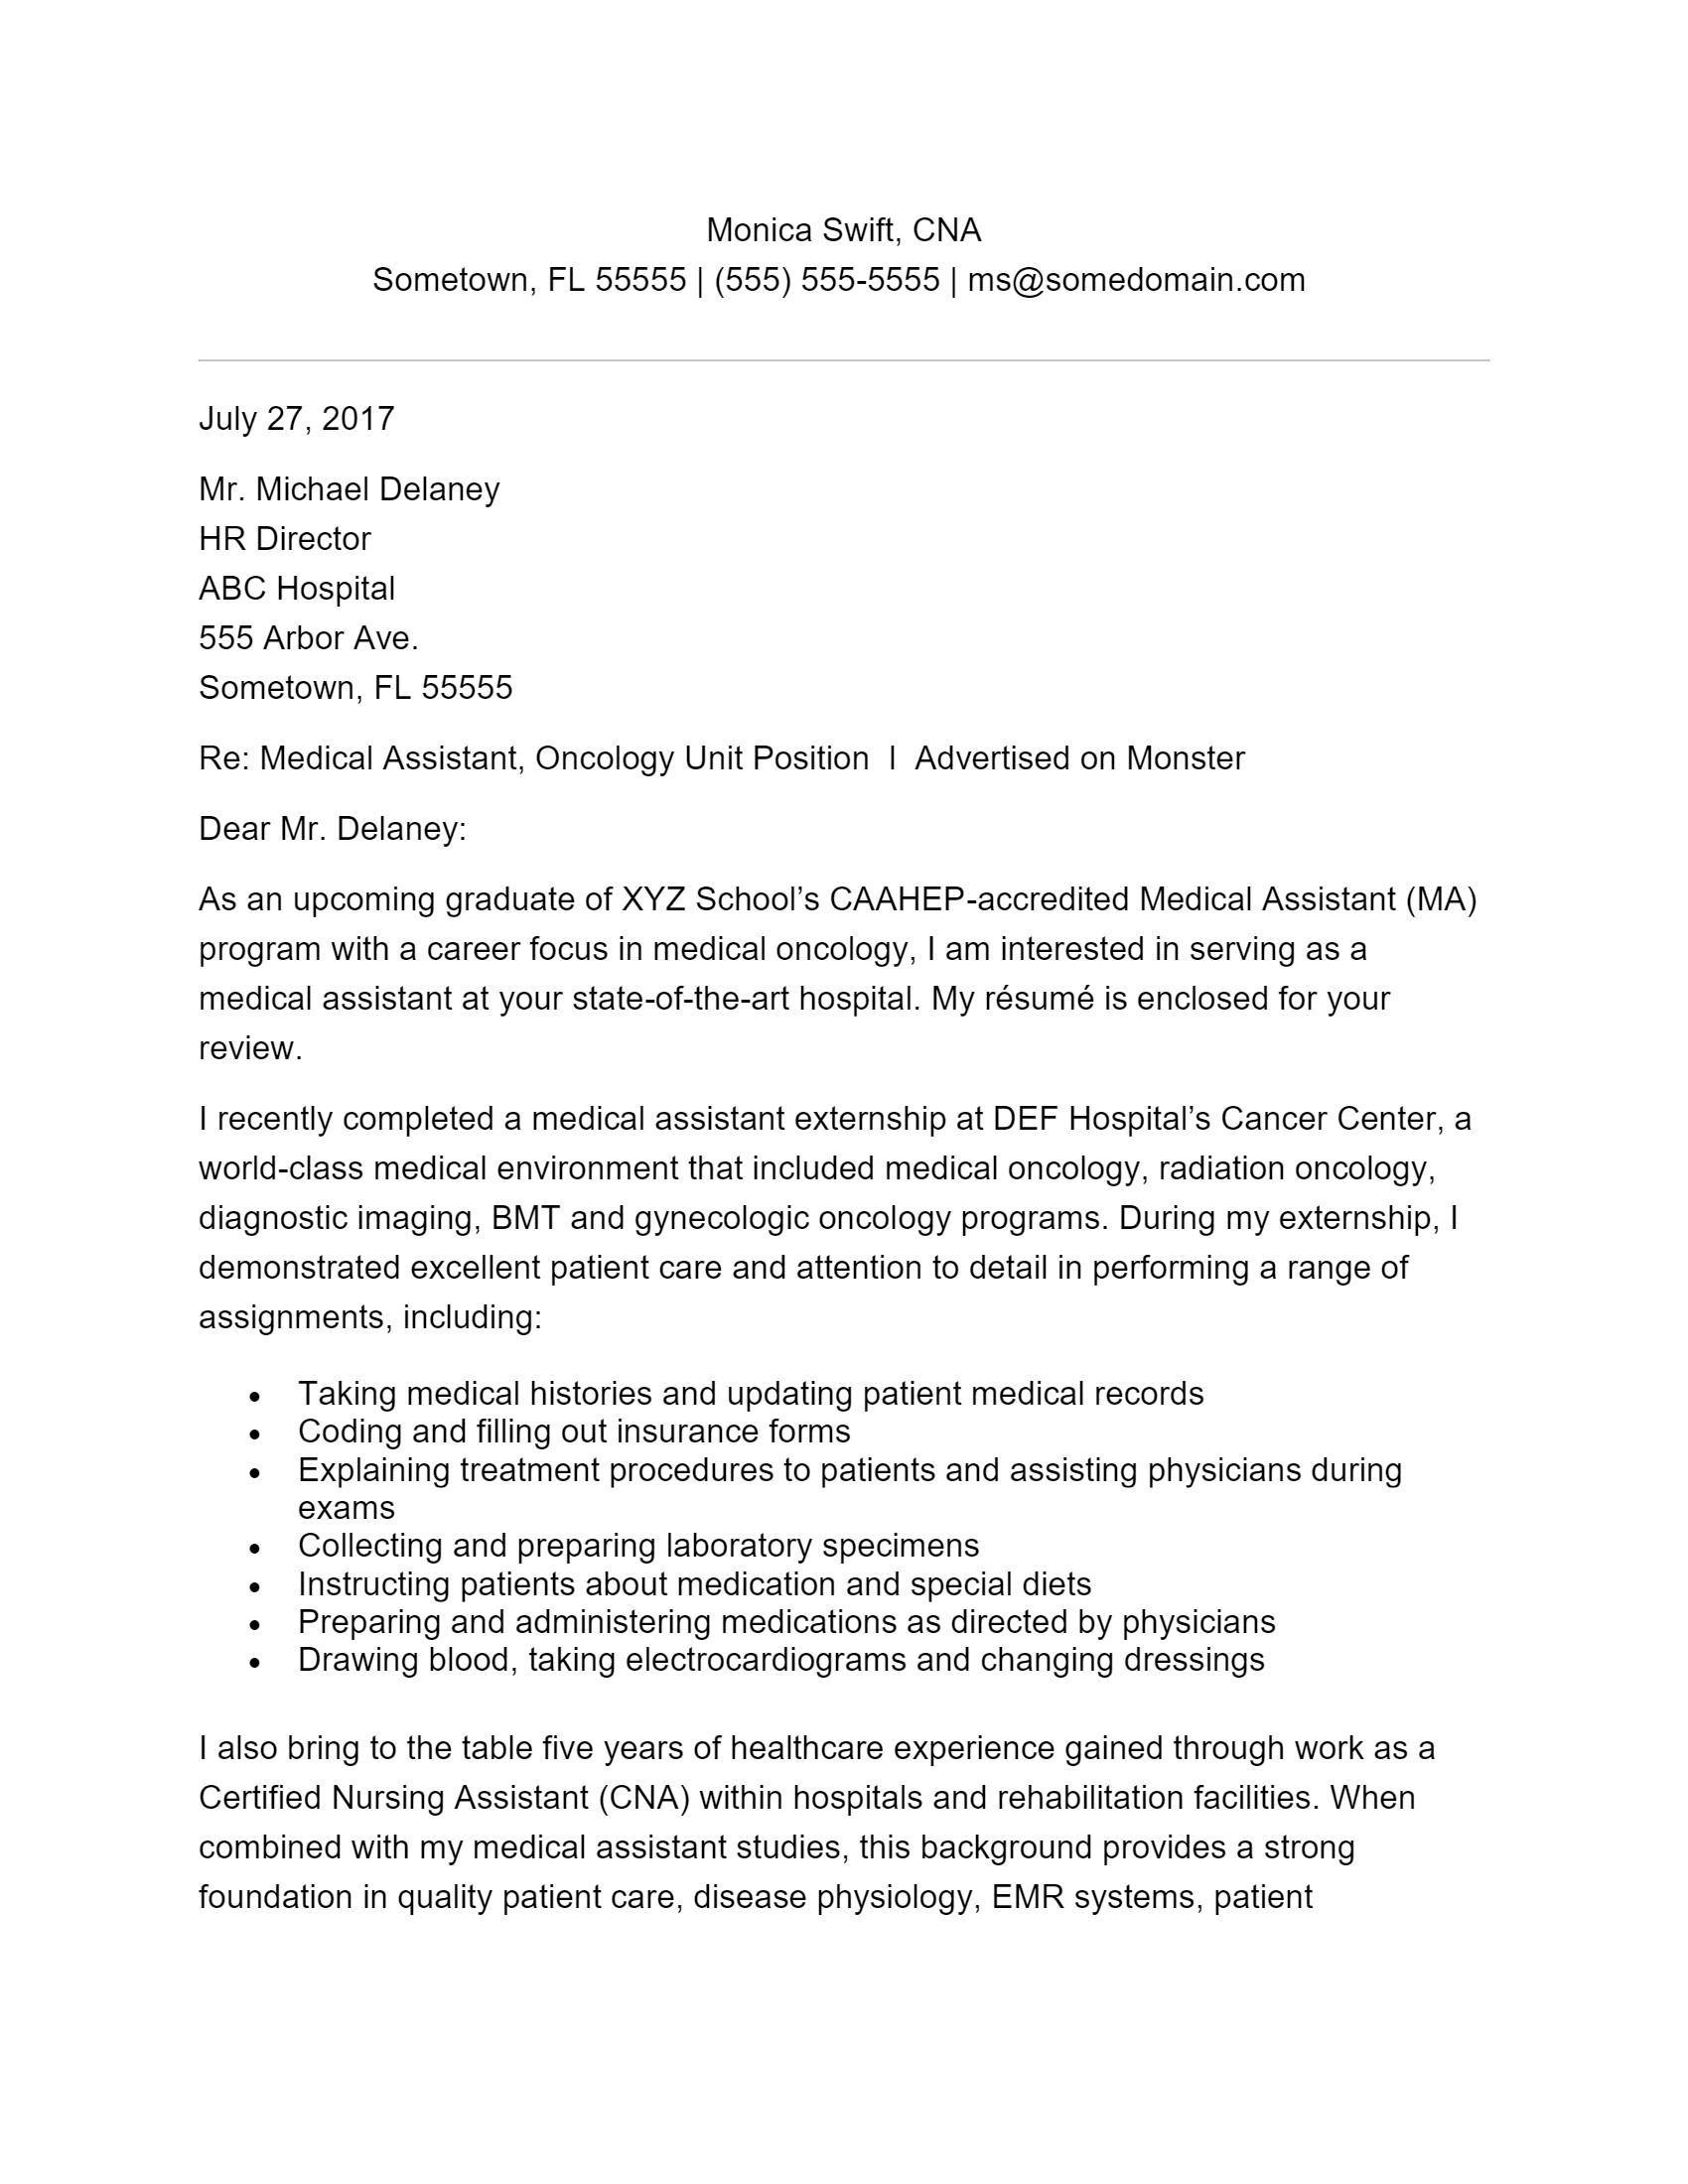 medical assistant cover letter for resume